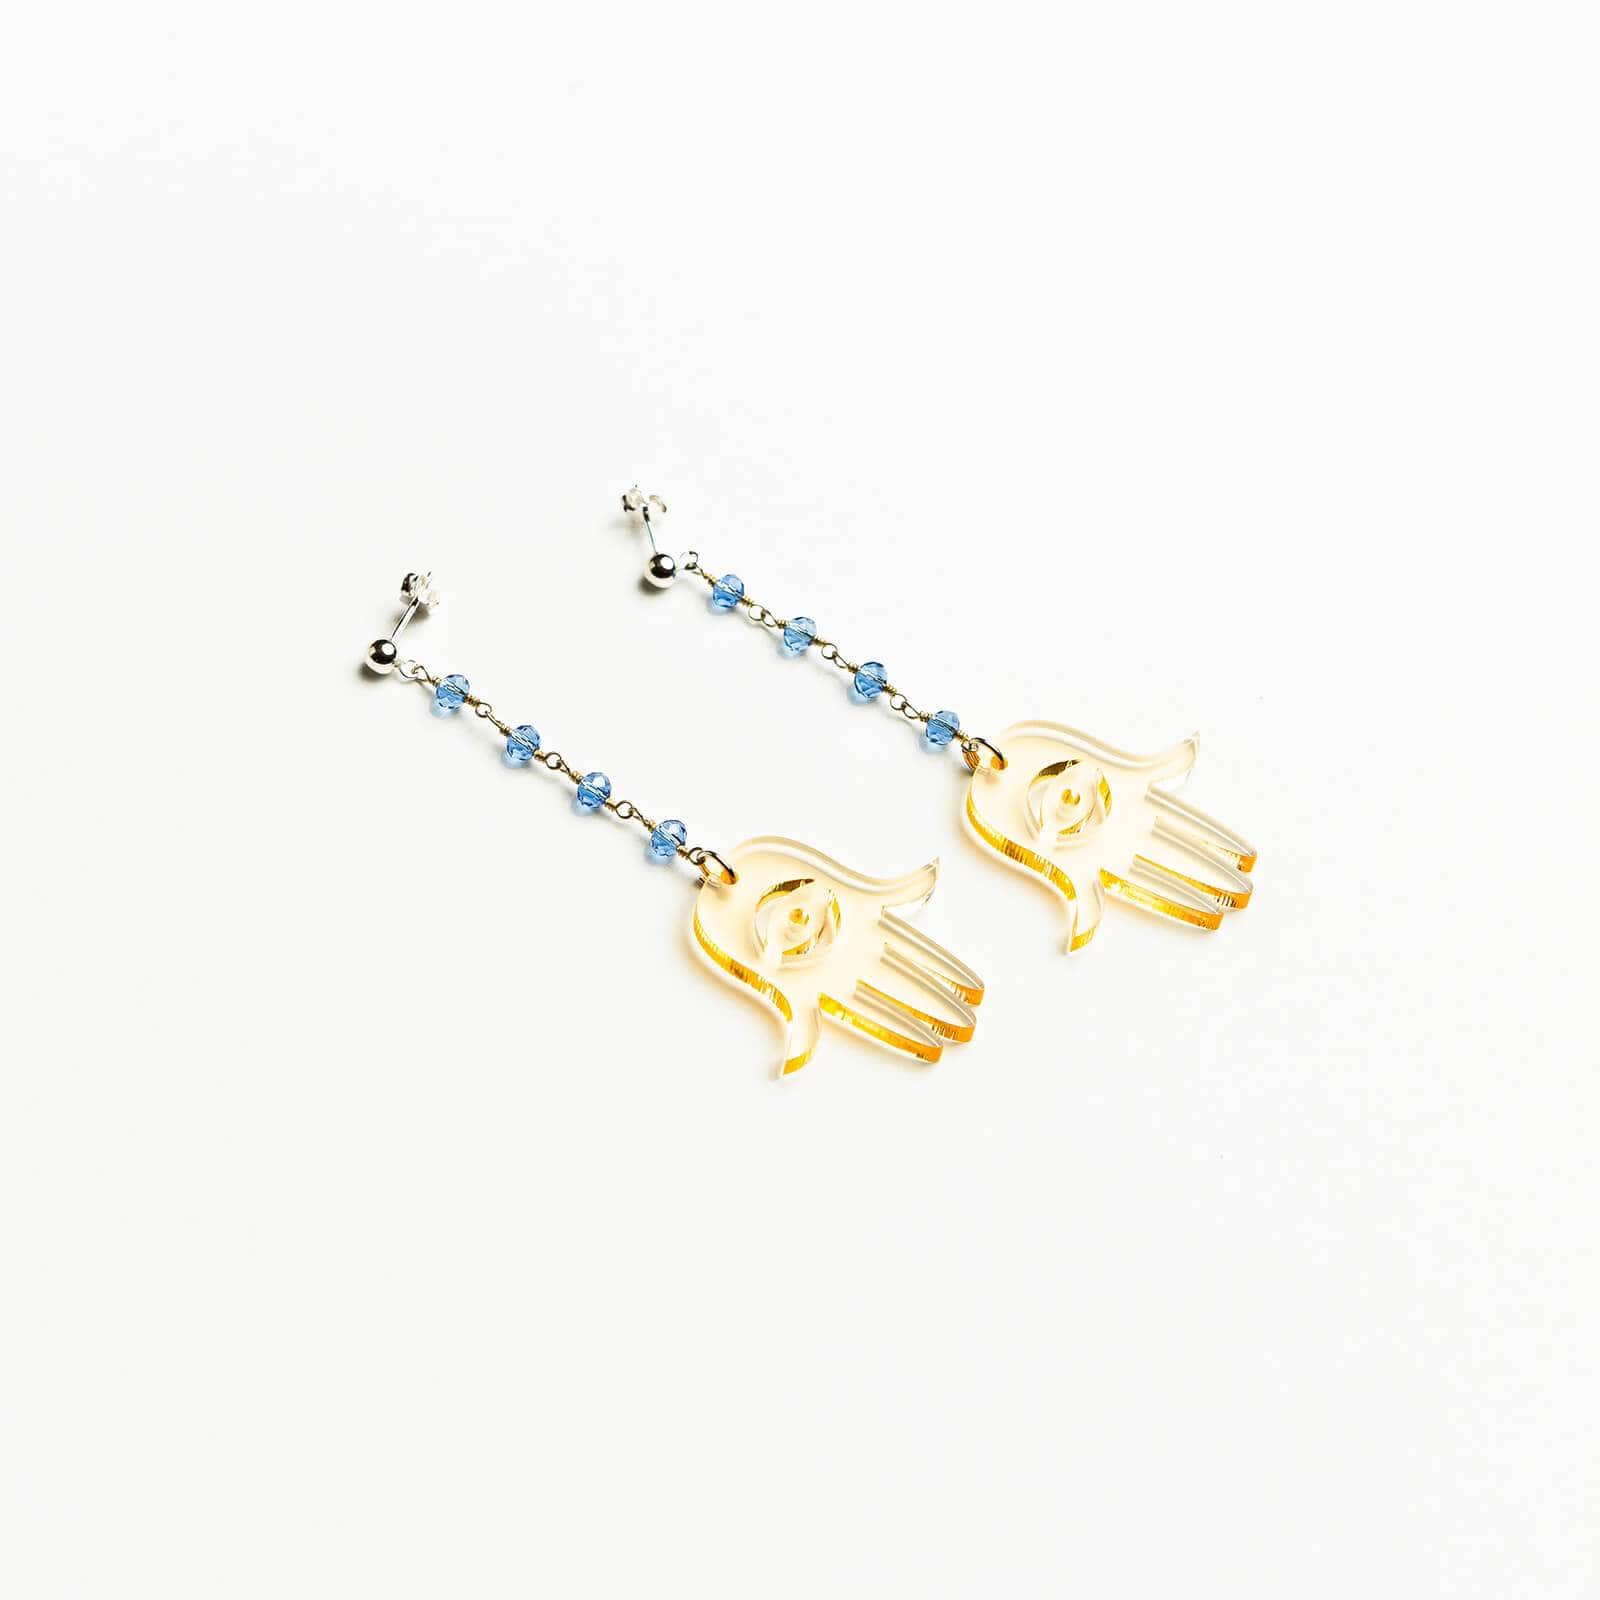 Ariel Tidhar Earrings Blue Maya Hamsa Earrings - Blue and Nude